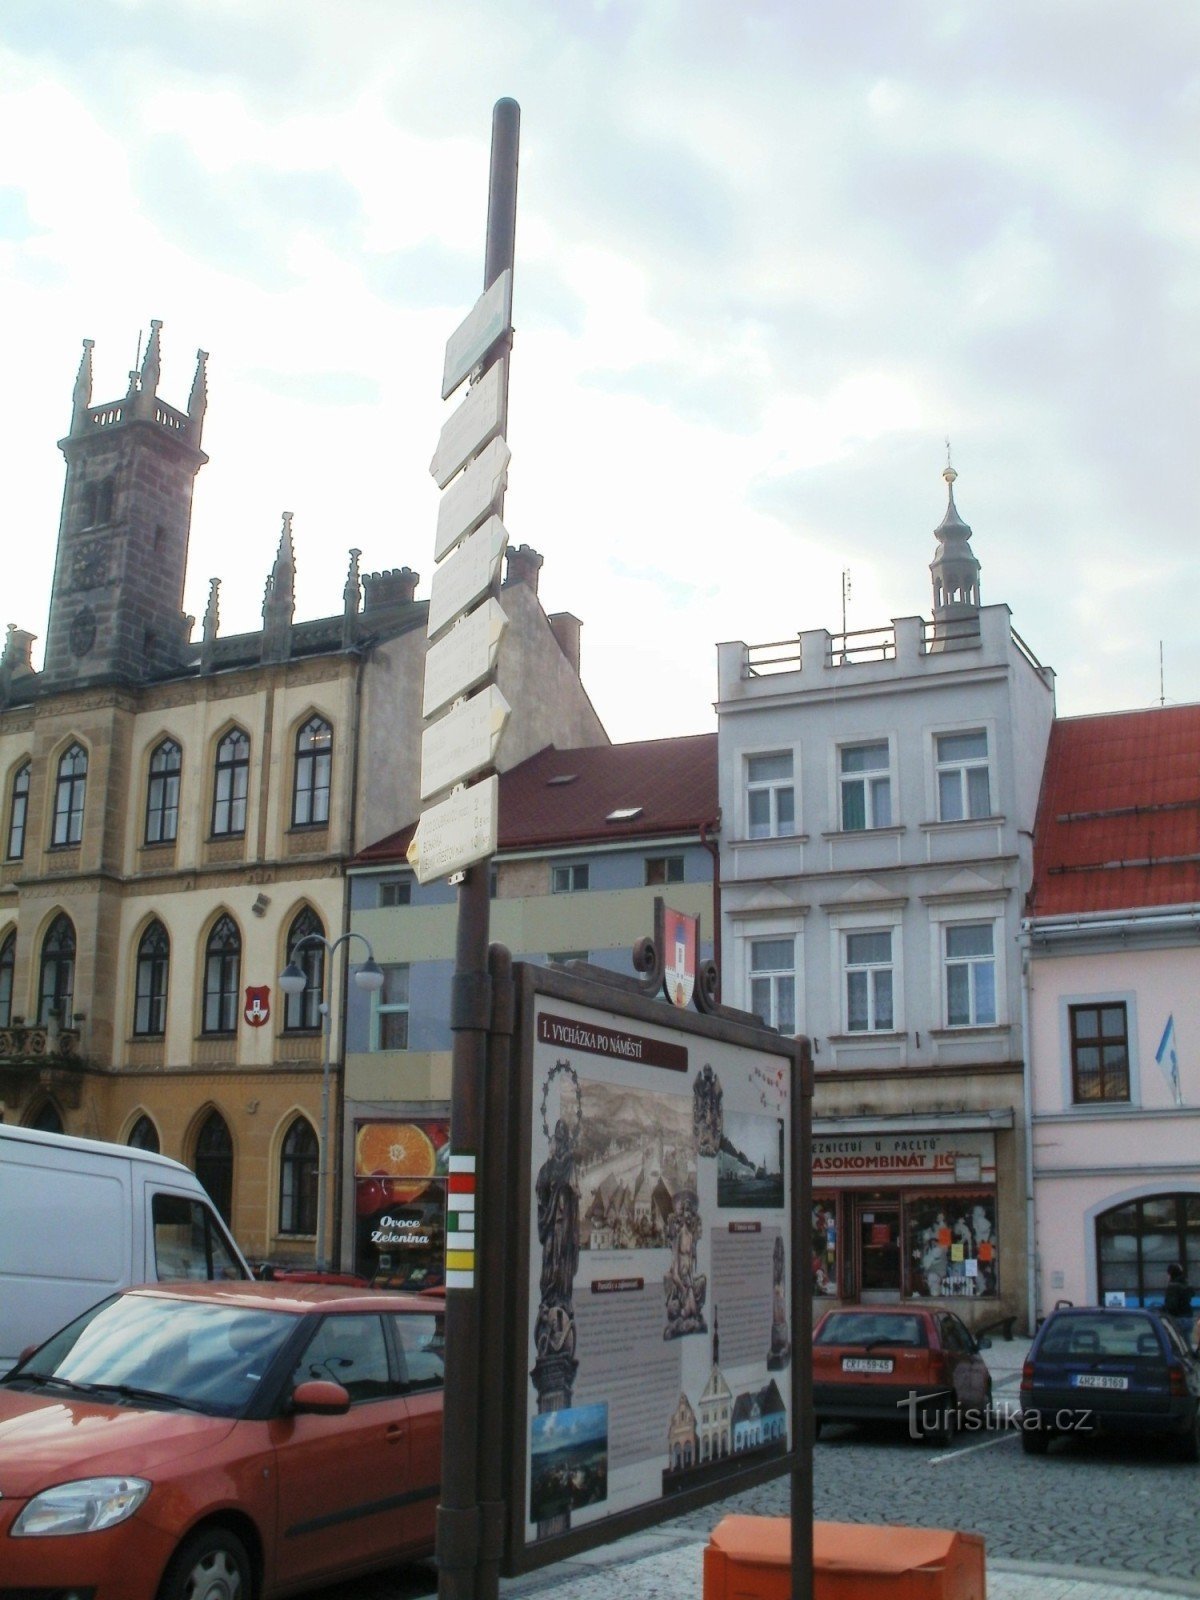 Hořice - the main tourist signpost